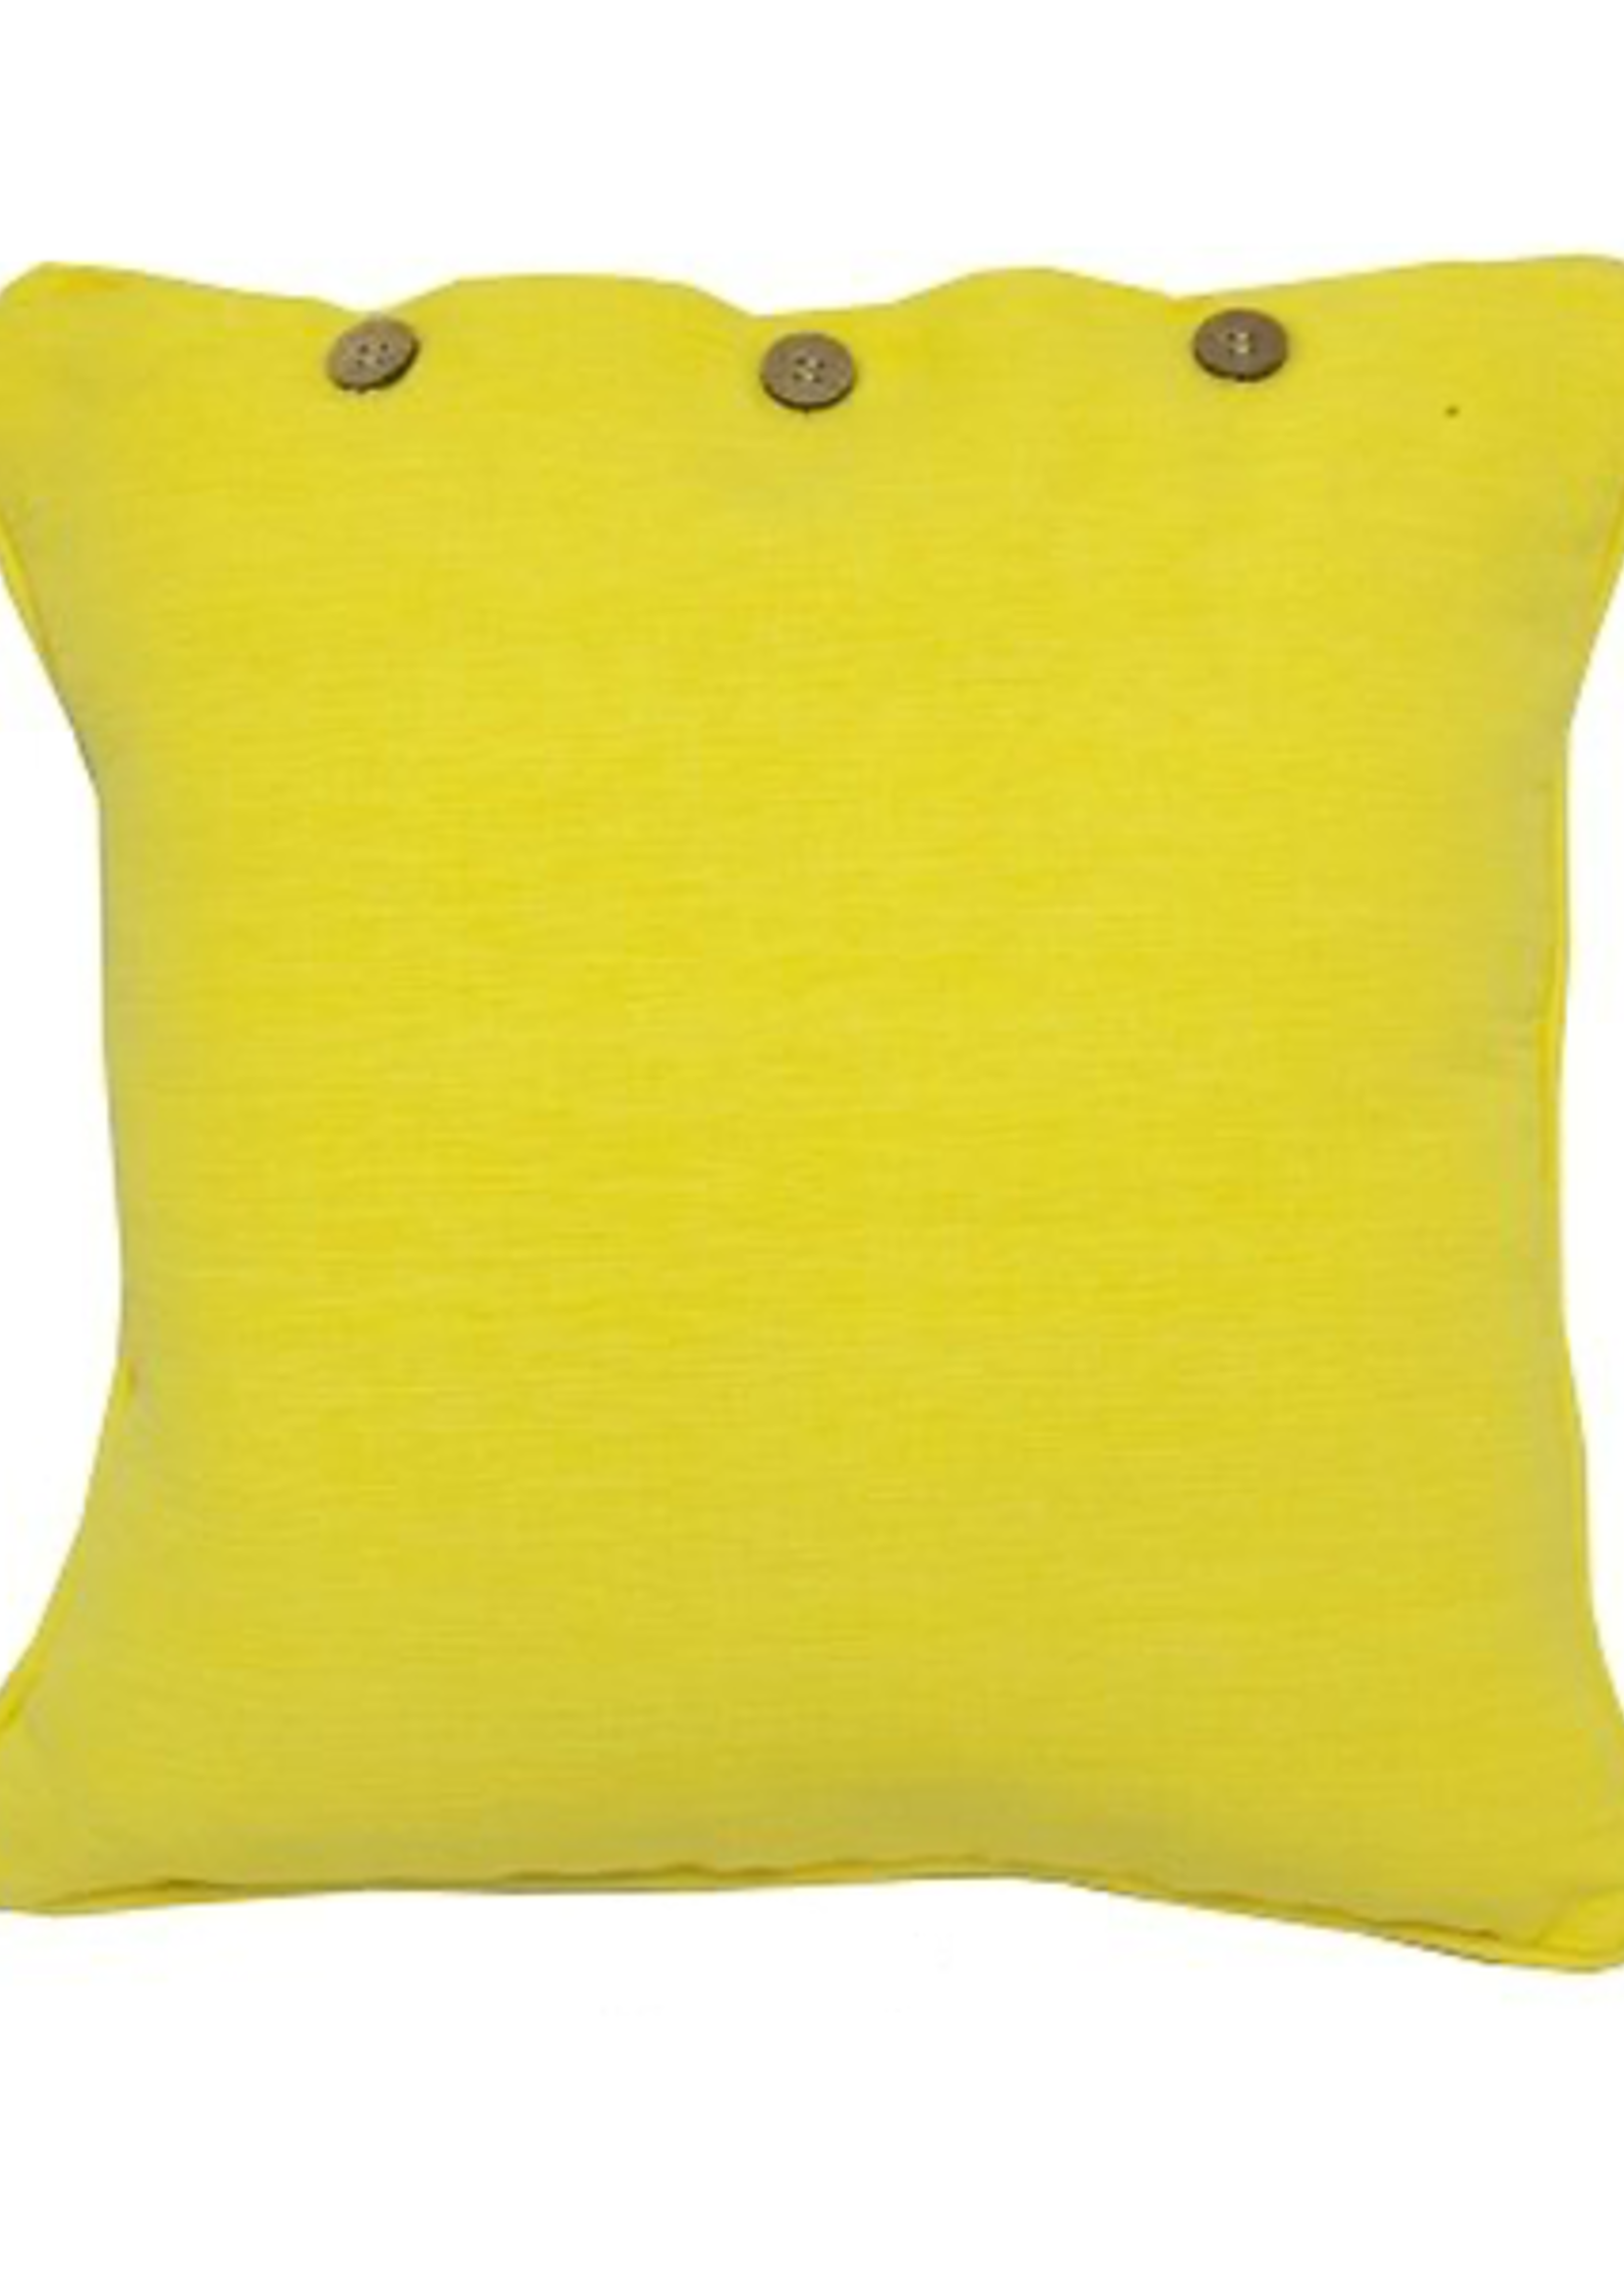 Craft Studio Yellow Cushion Cover 40x40cm